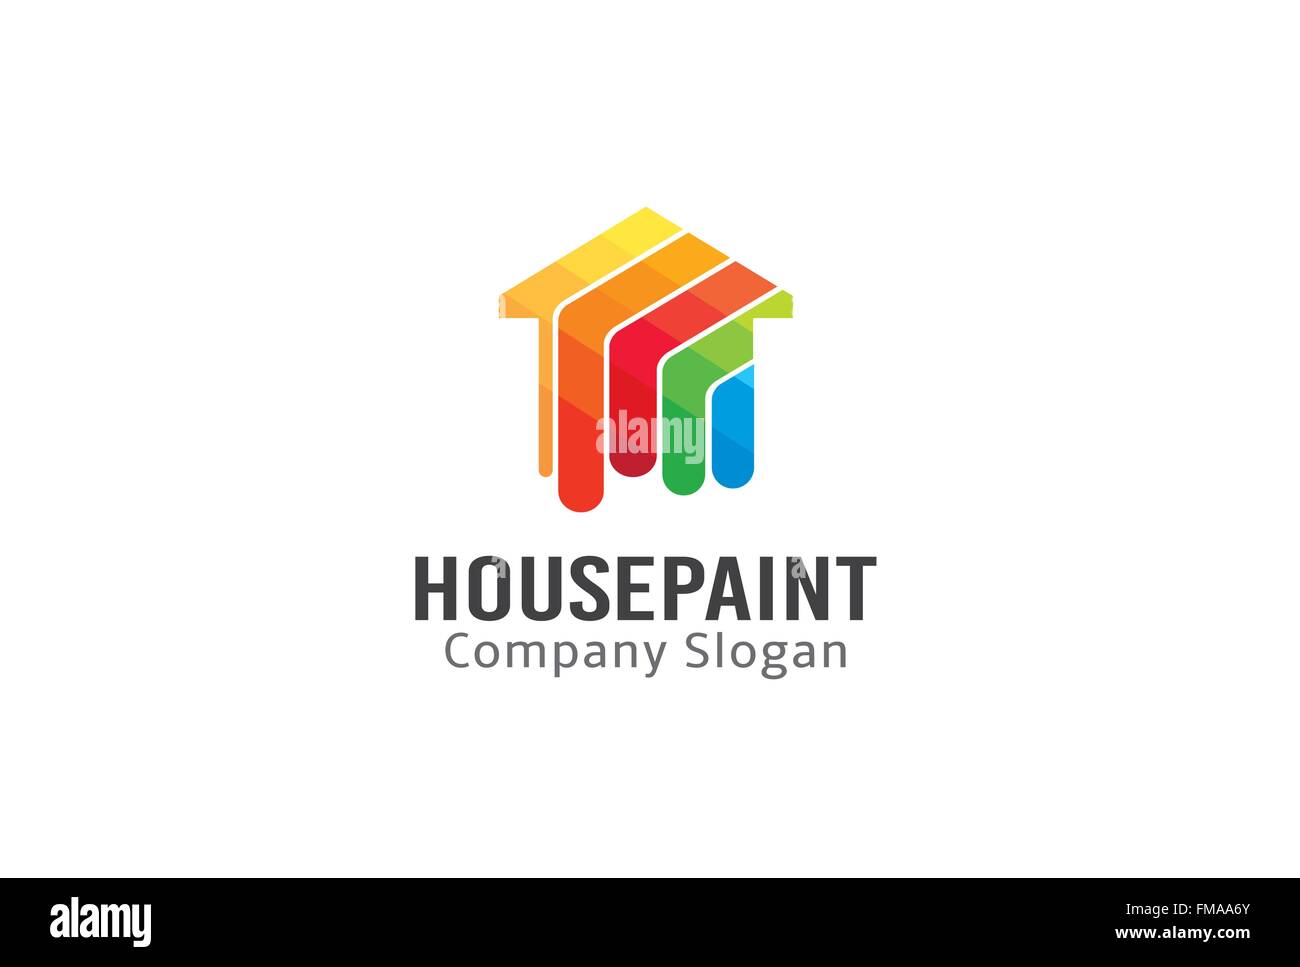 House Paint Design Illustration Stock Vector